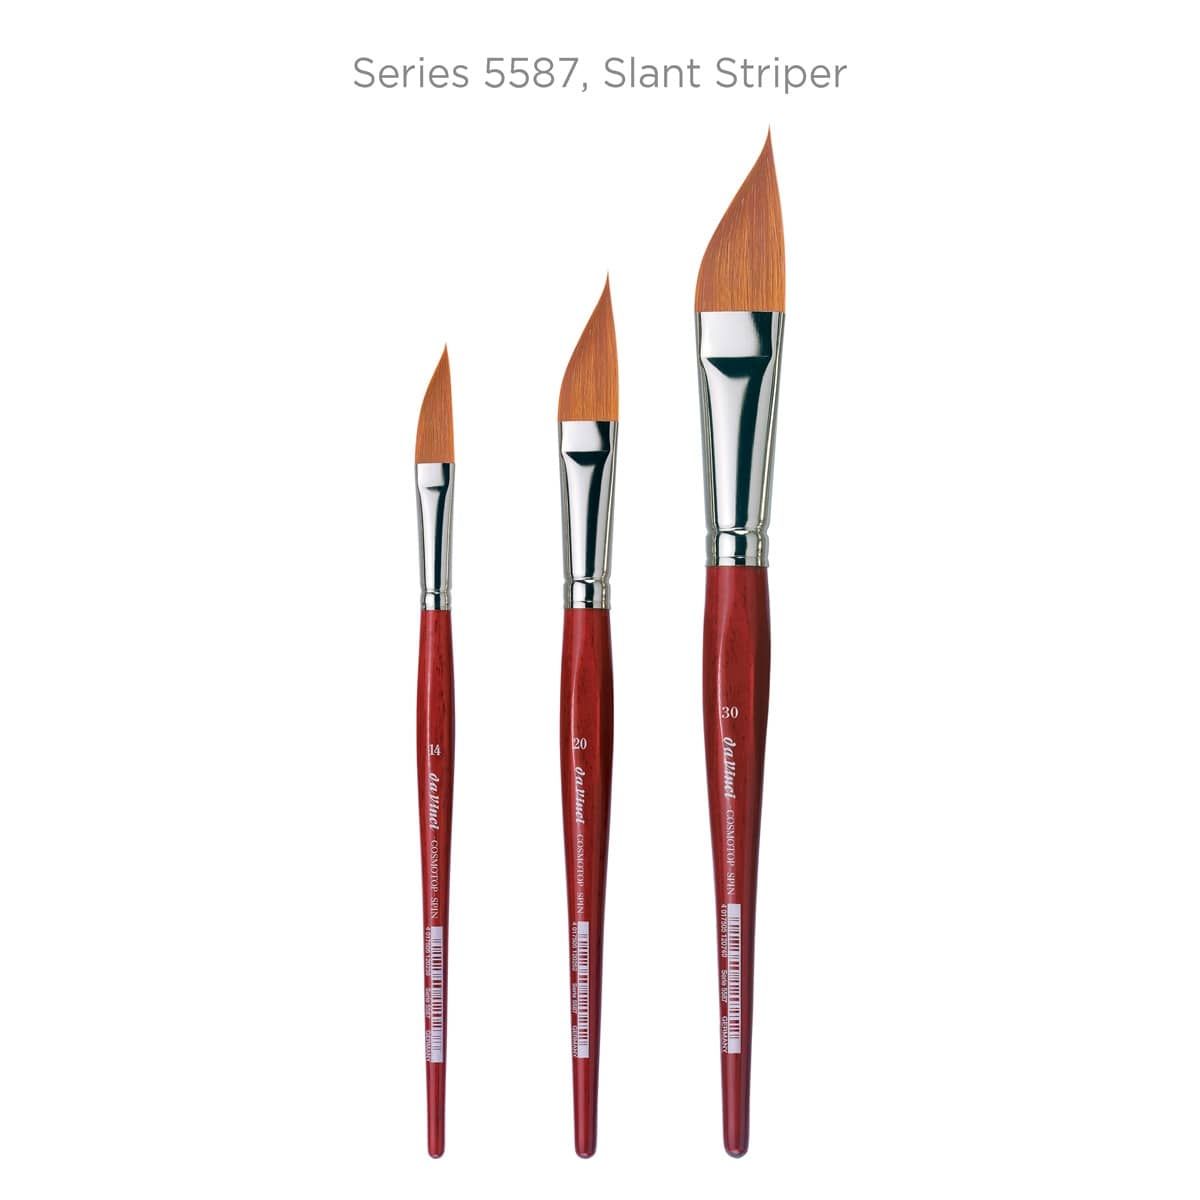 Series 5587 Slant Striper Brushes